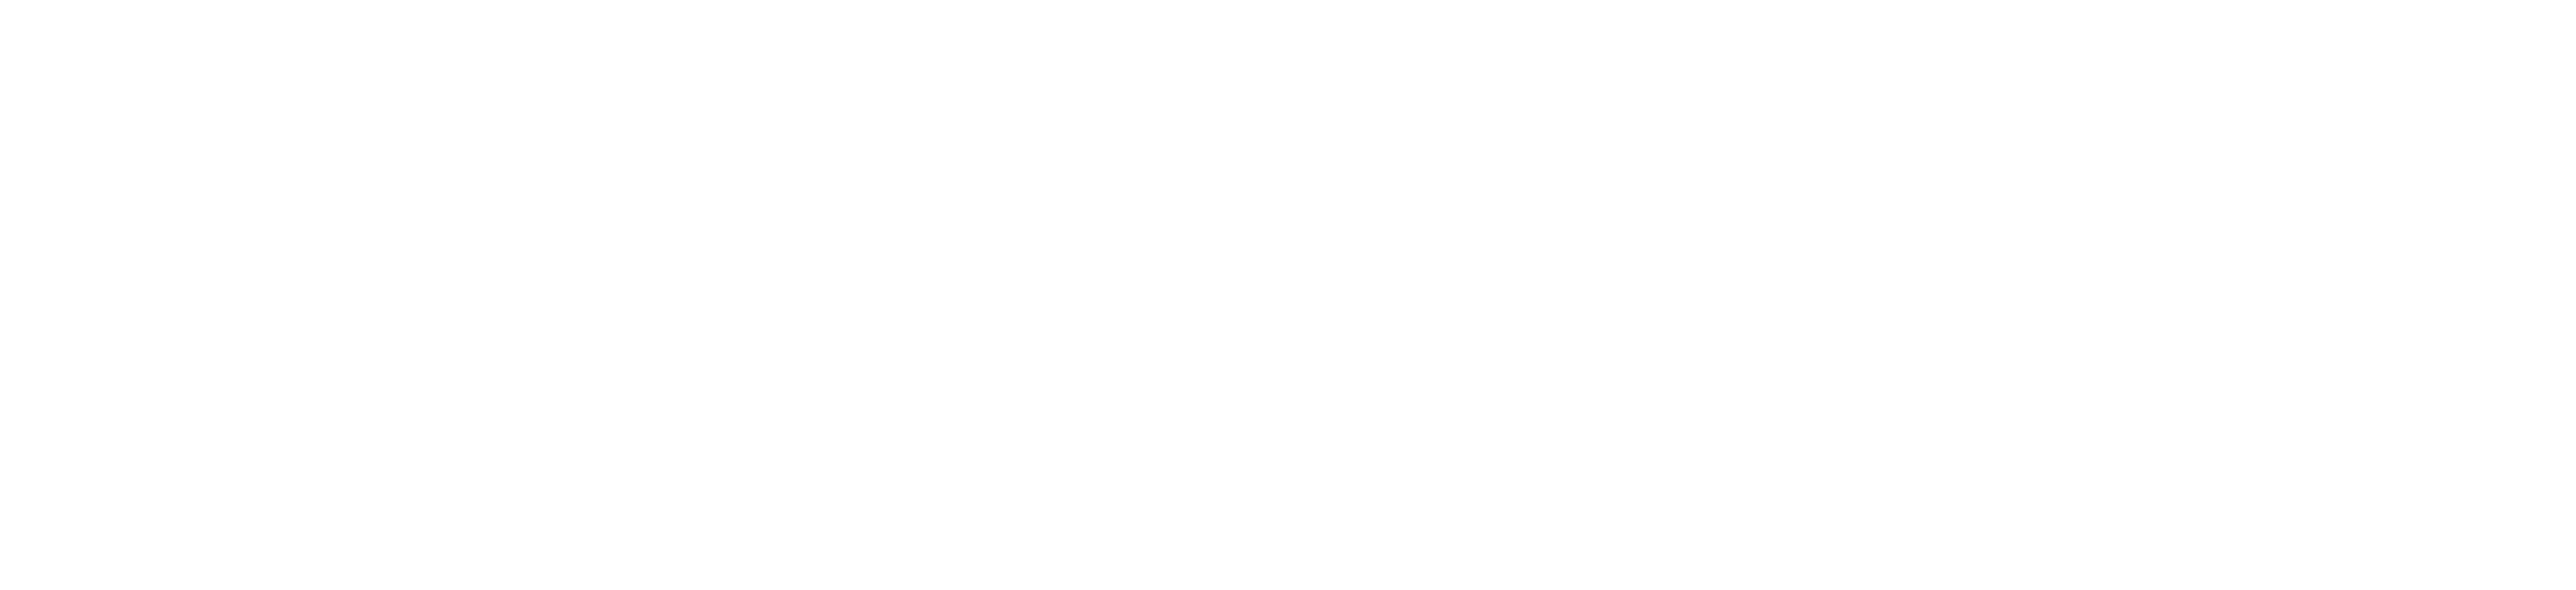 Intercept_project_logo_def_white